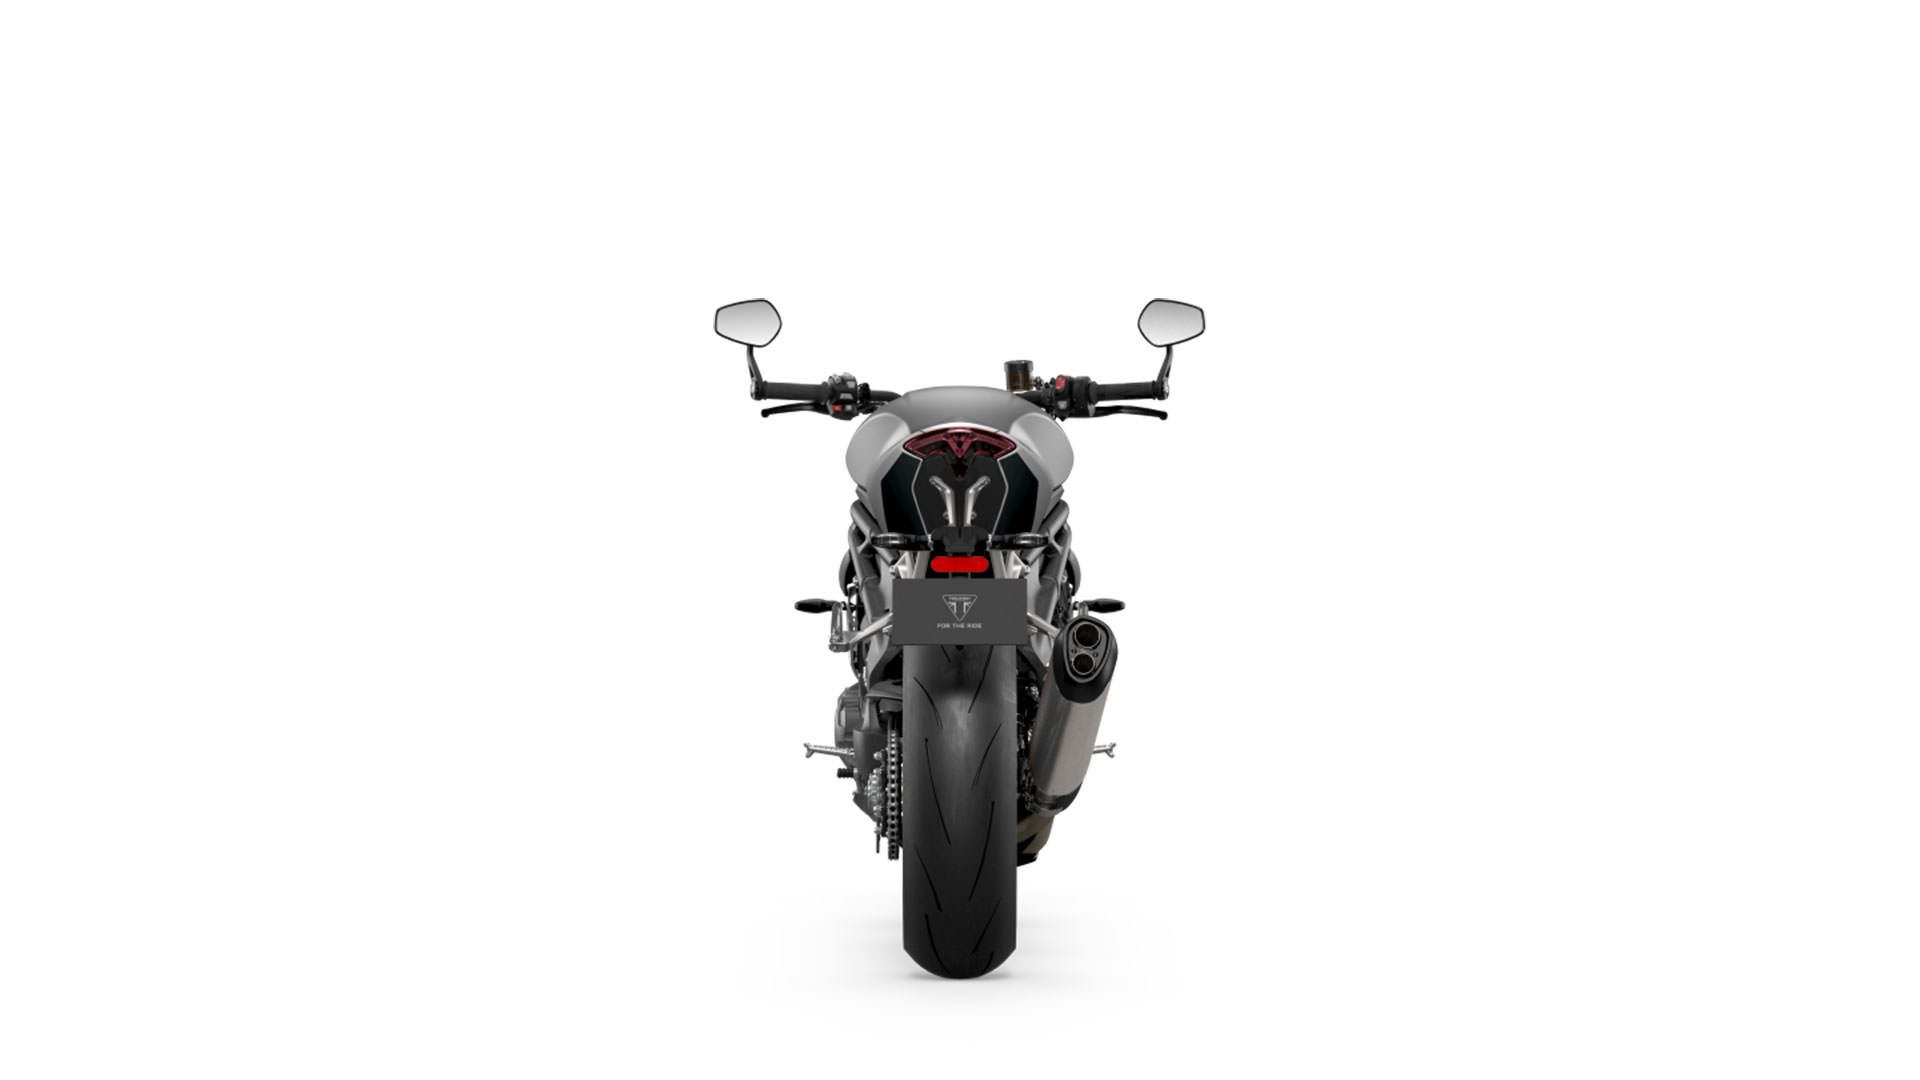 نمای عقب موتورسیکلت تریومف اسپید تریپل 1200 آر اس / Triumph Speed Triple 1200 RS 2021 Motorcycle